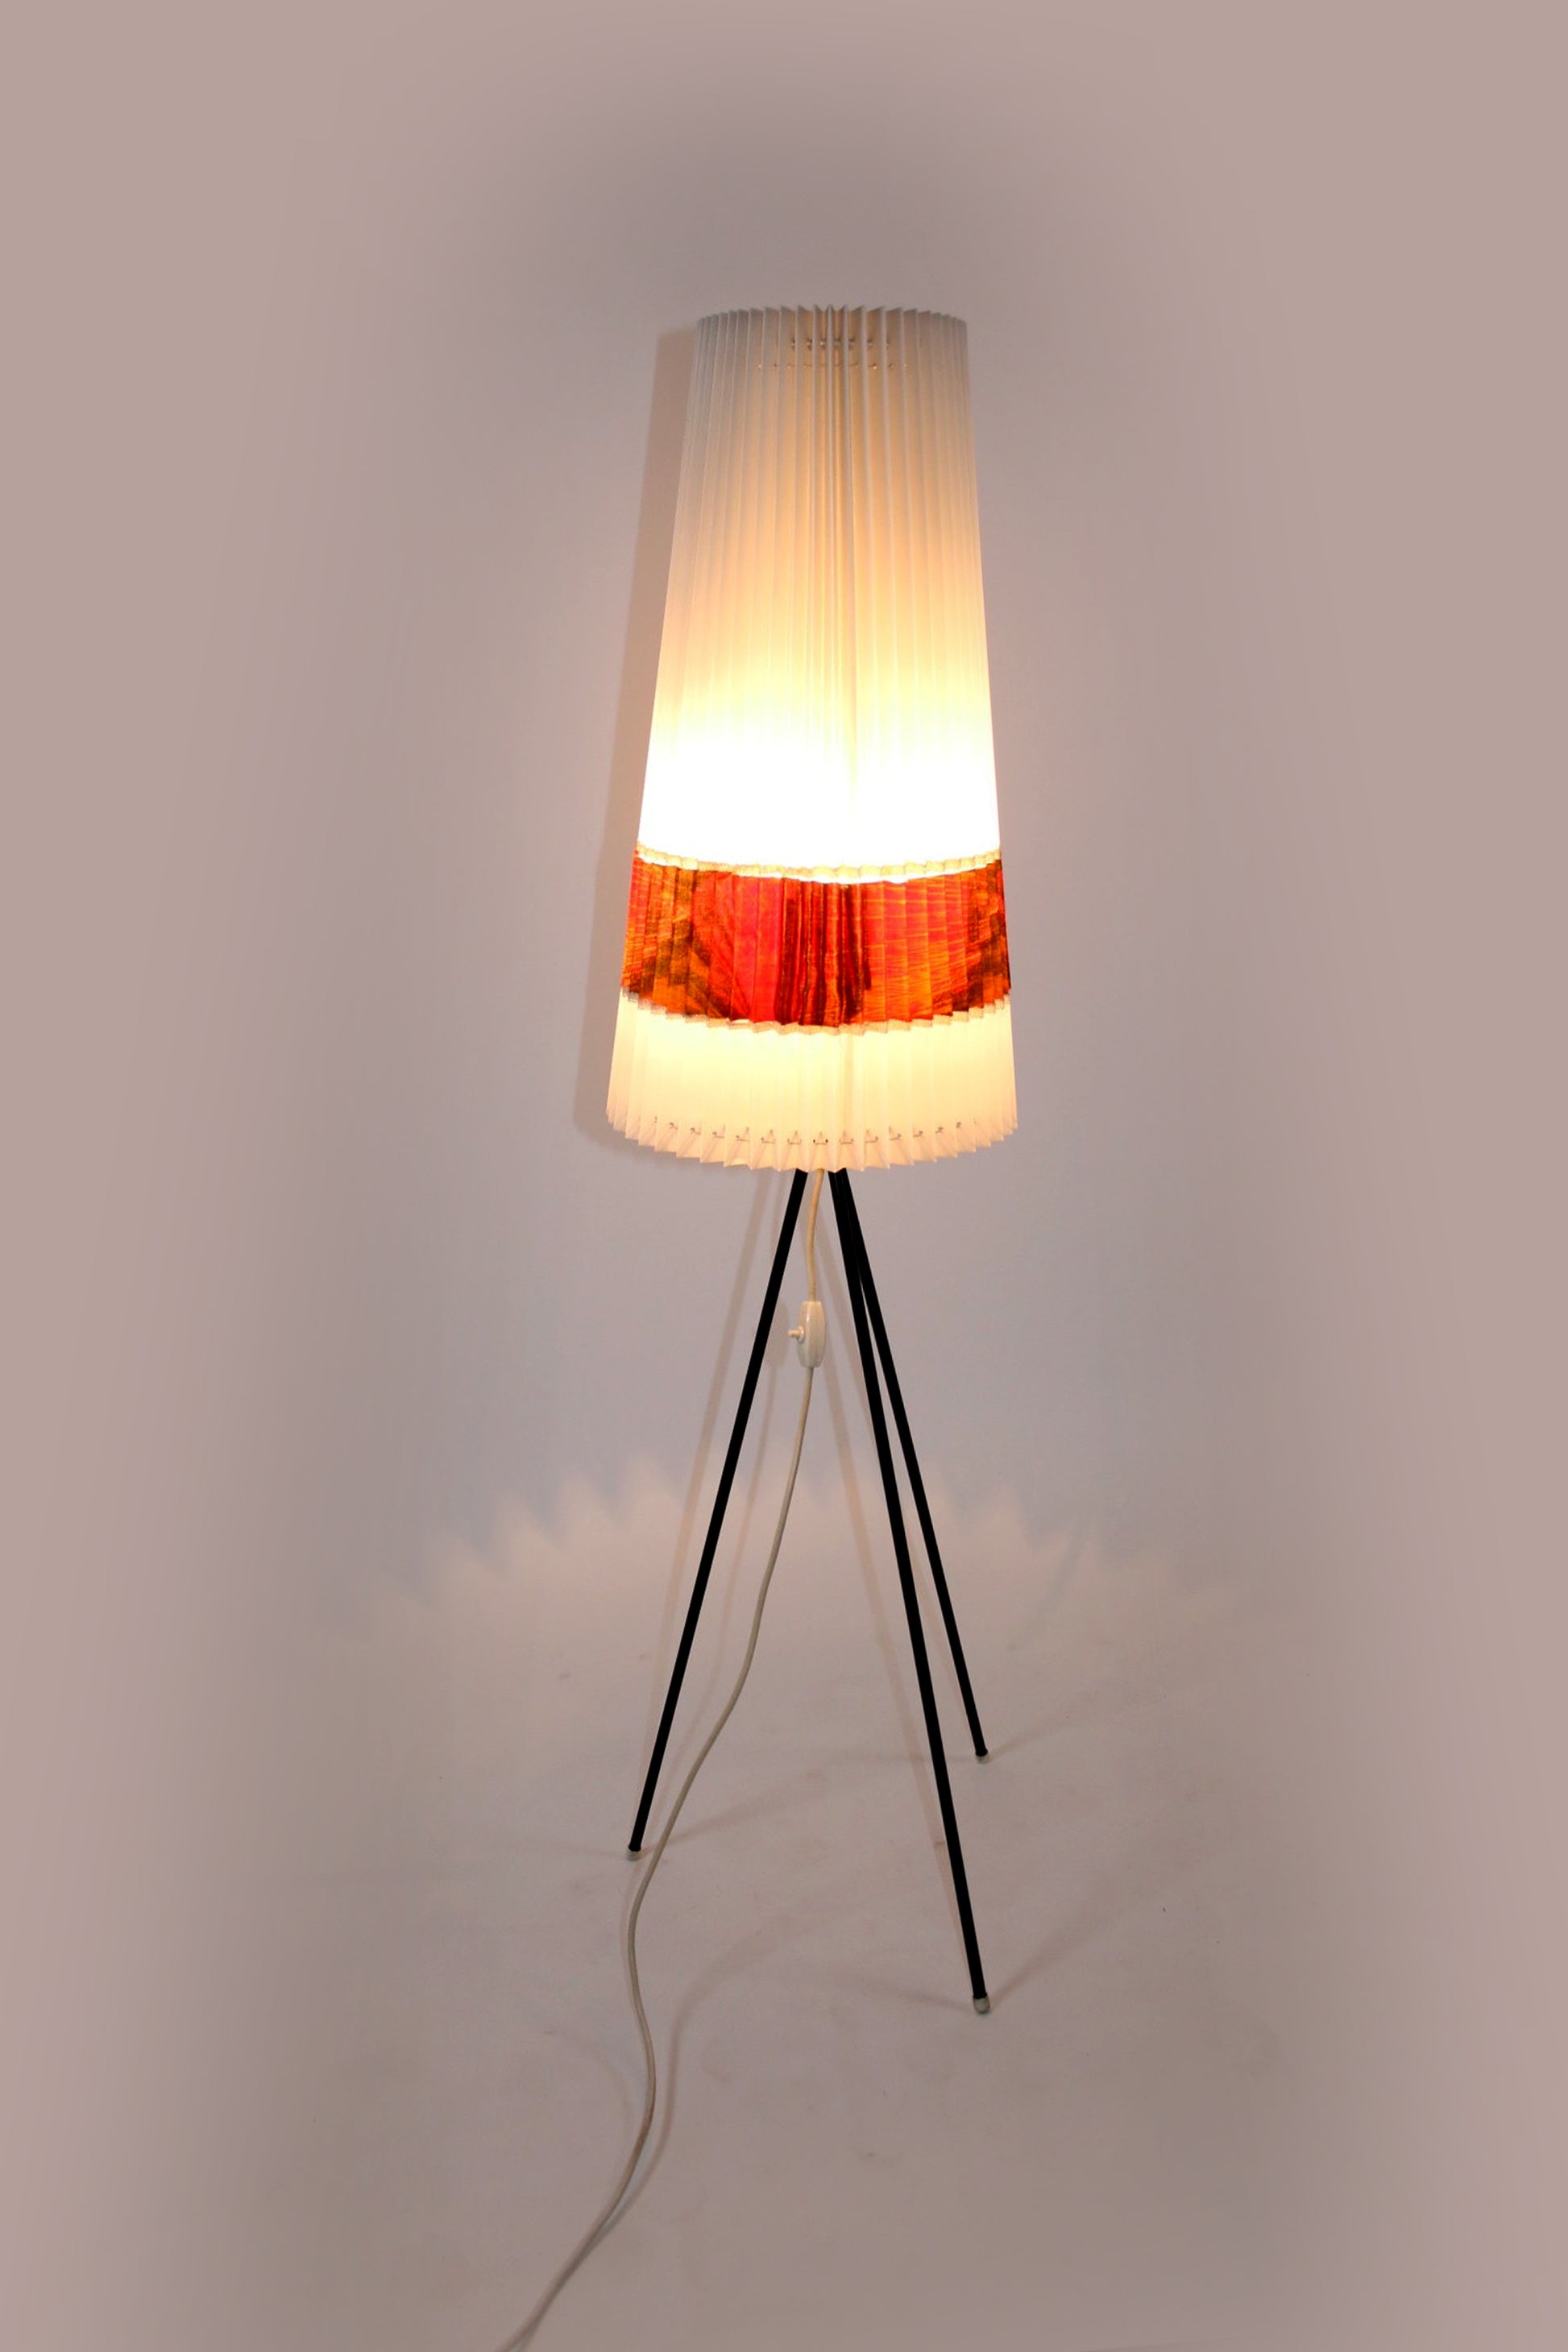 Terugspoelen Getalenteerd monteren Staande lamp Aro leuchte met orginelen celluloide kap – Timeless-Art